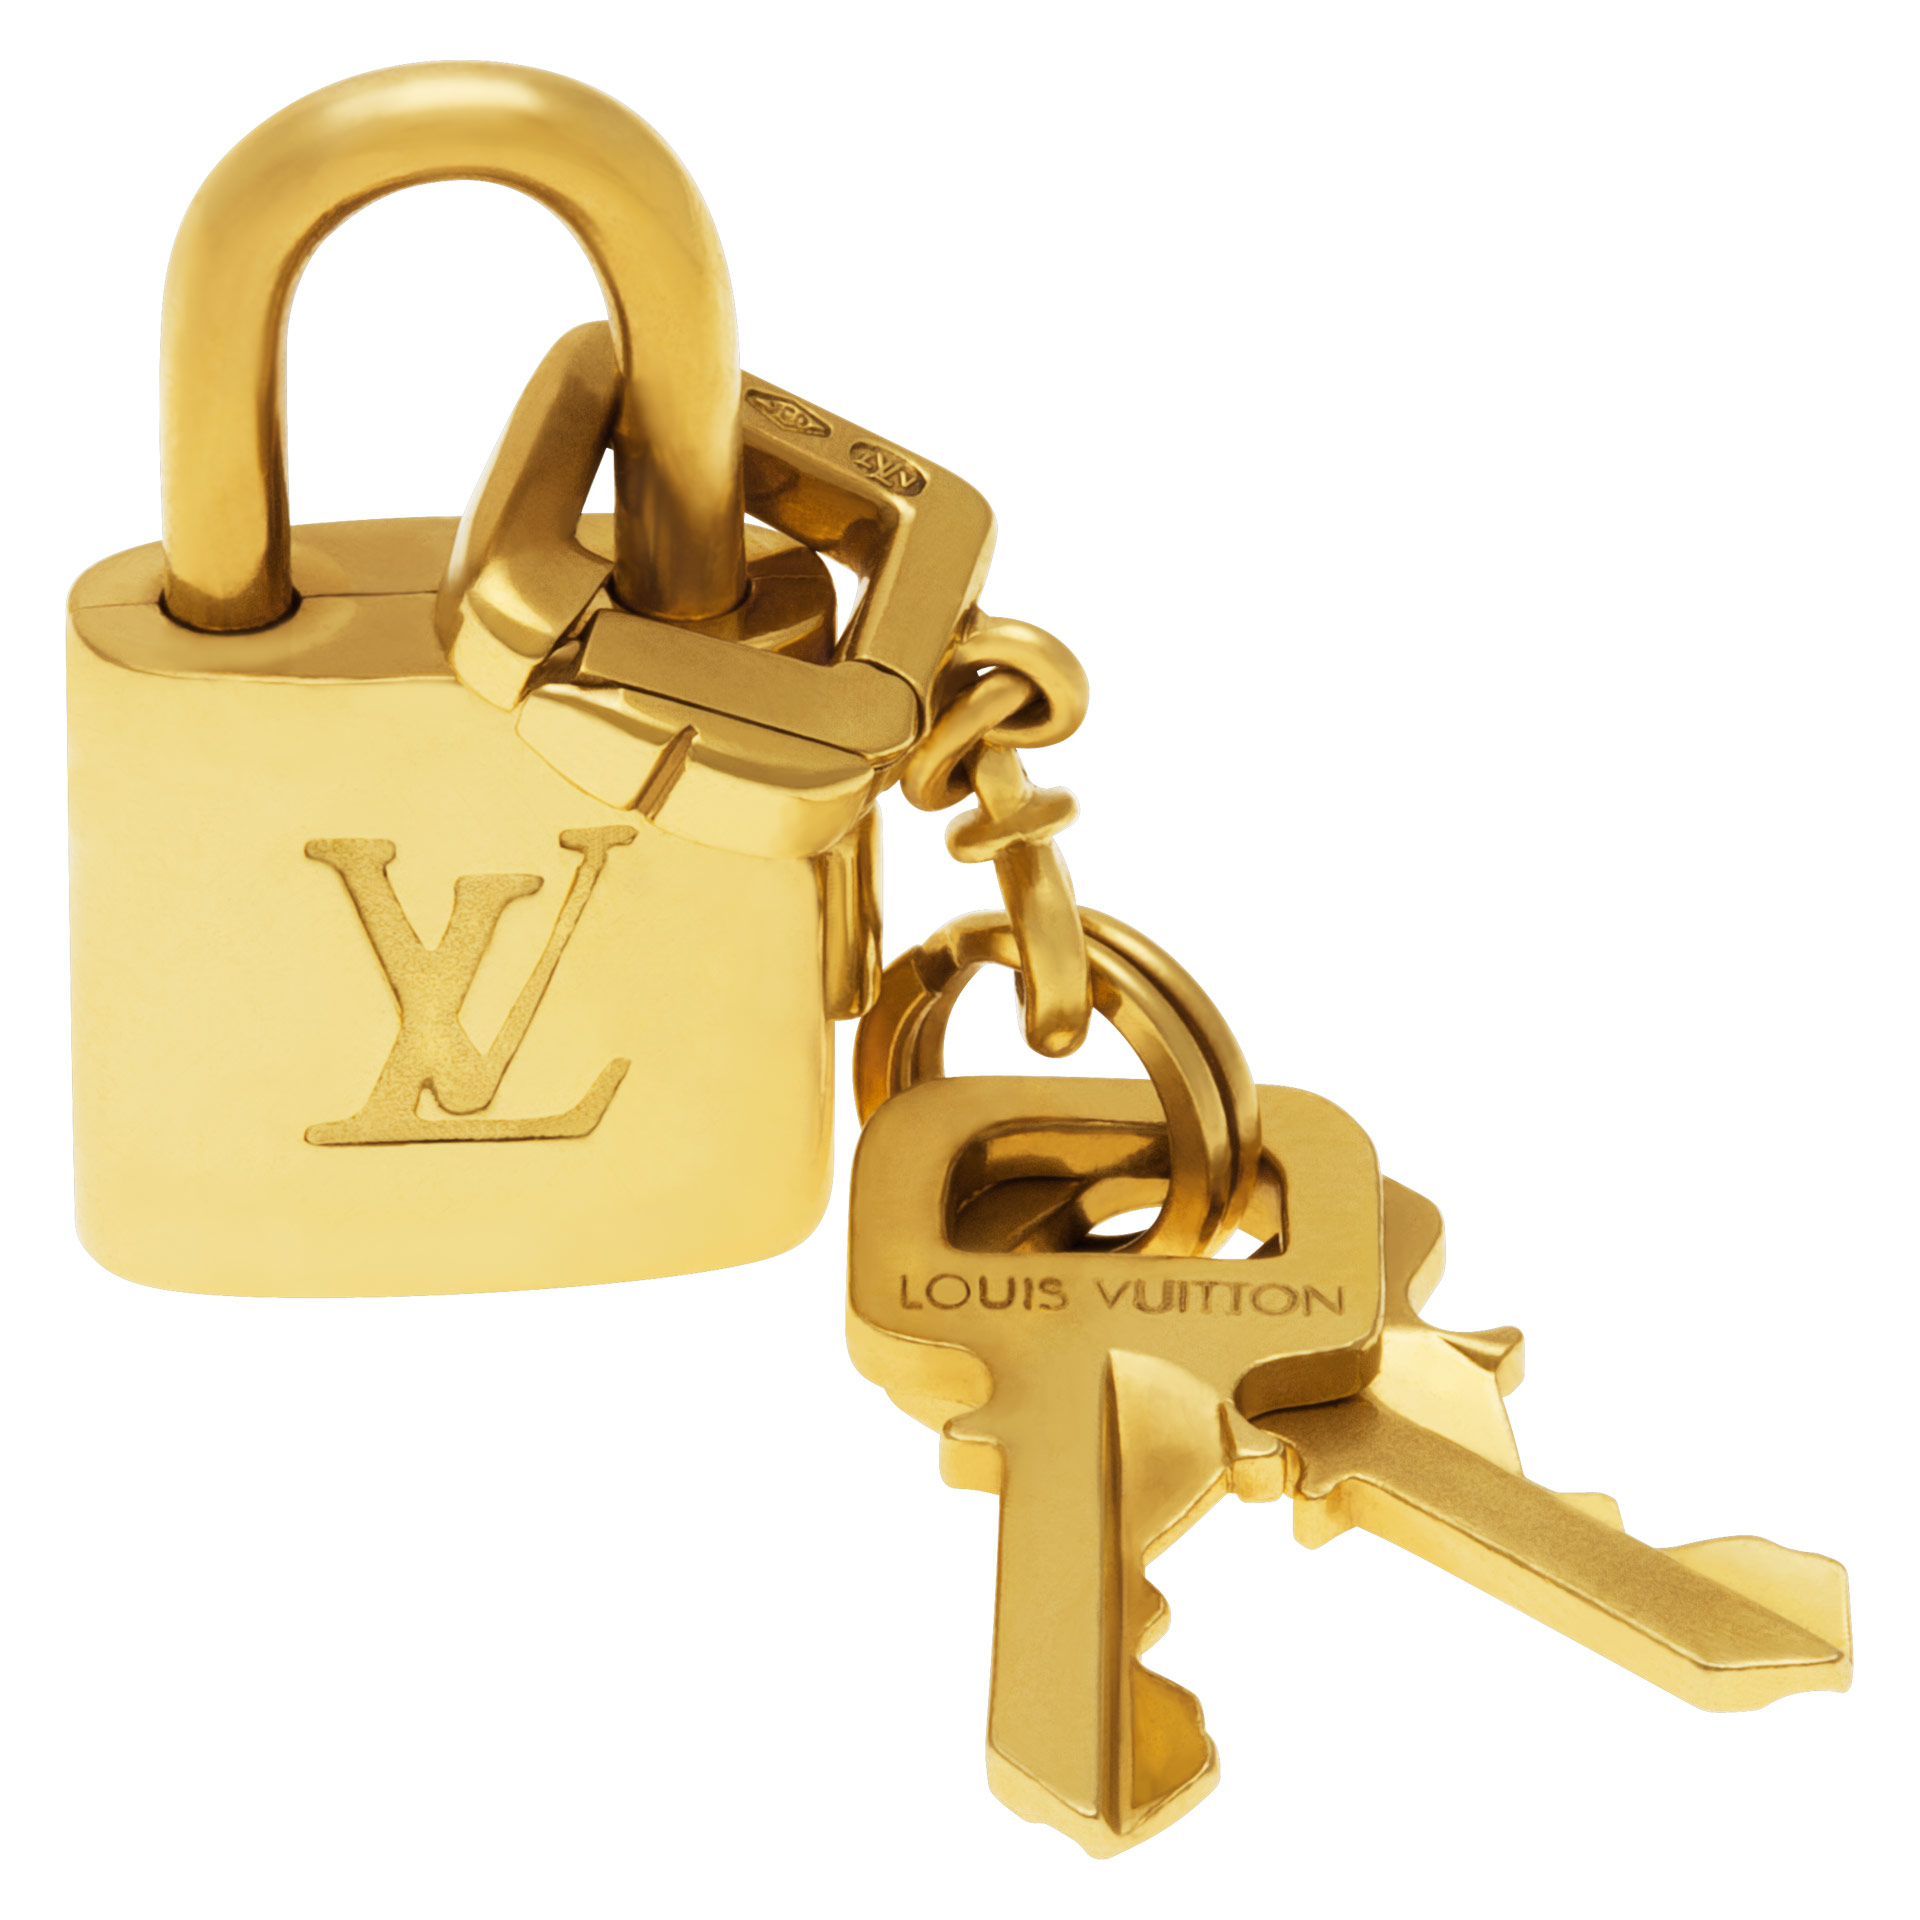 Louis Vuitton padlock and keys bracelet In 18k